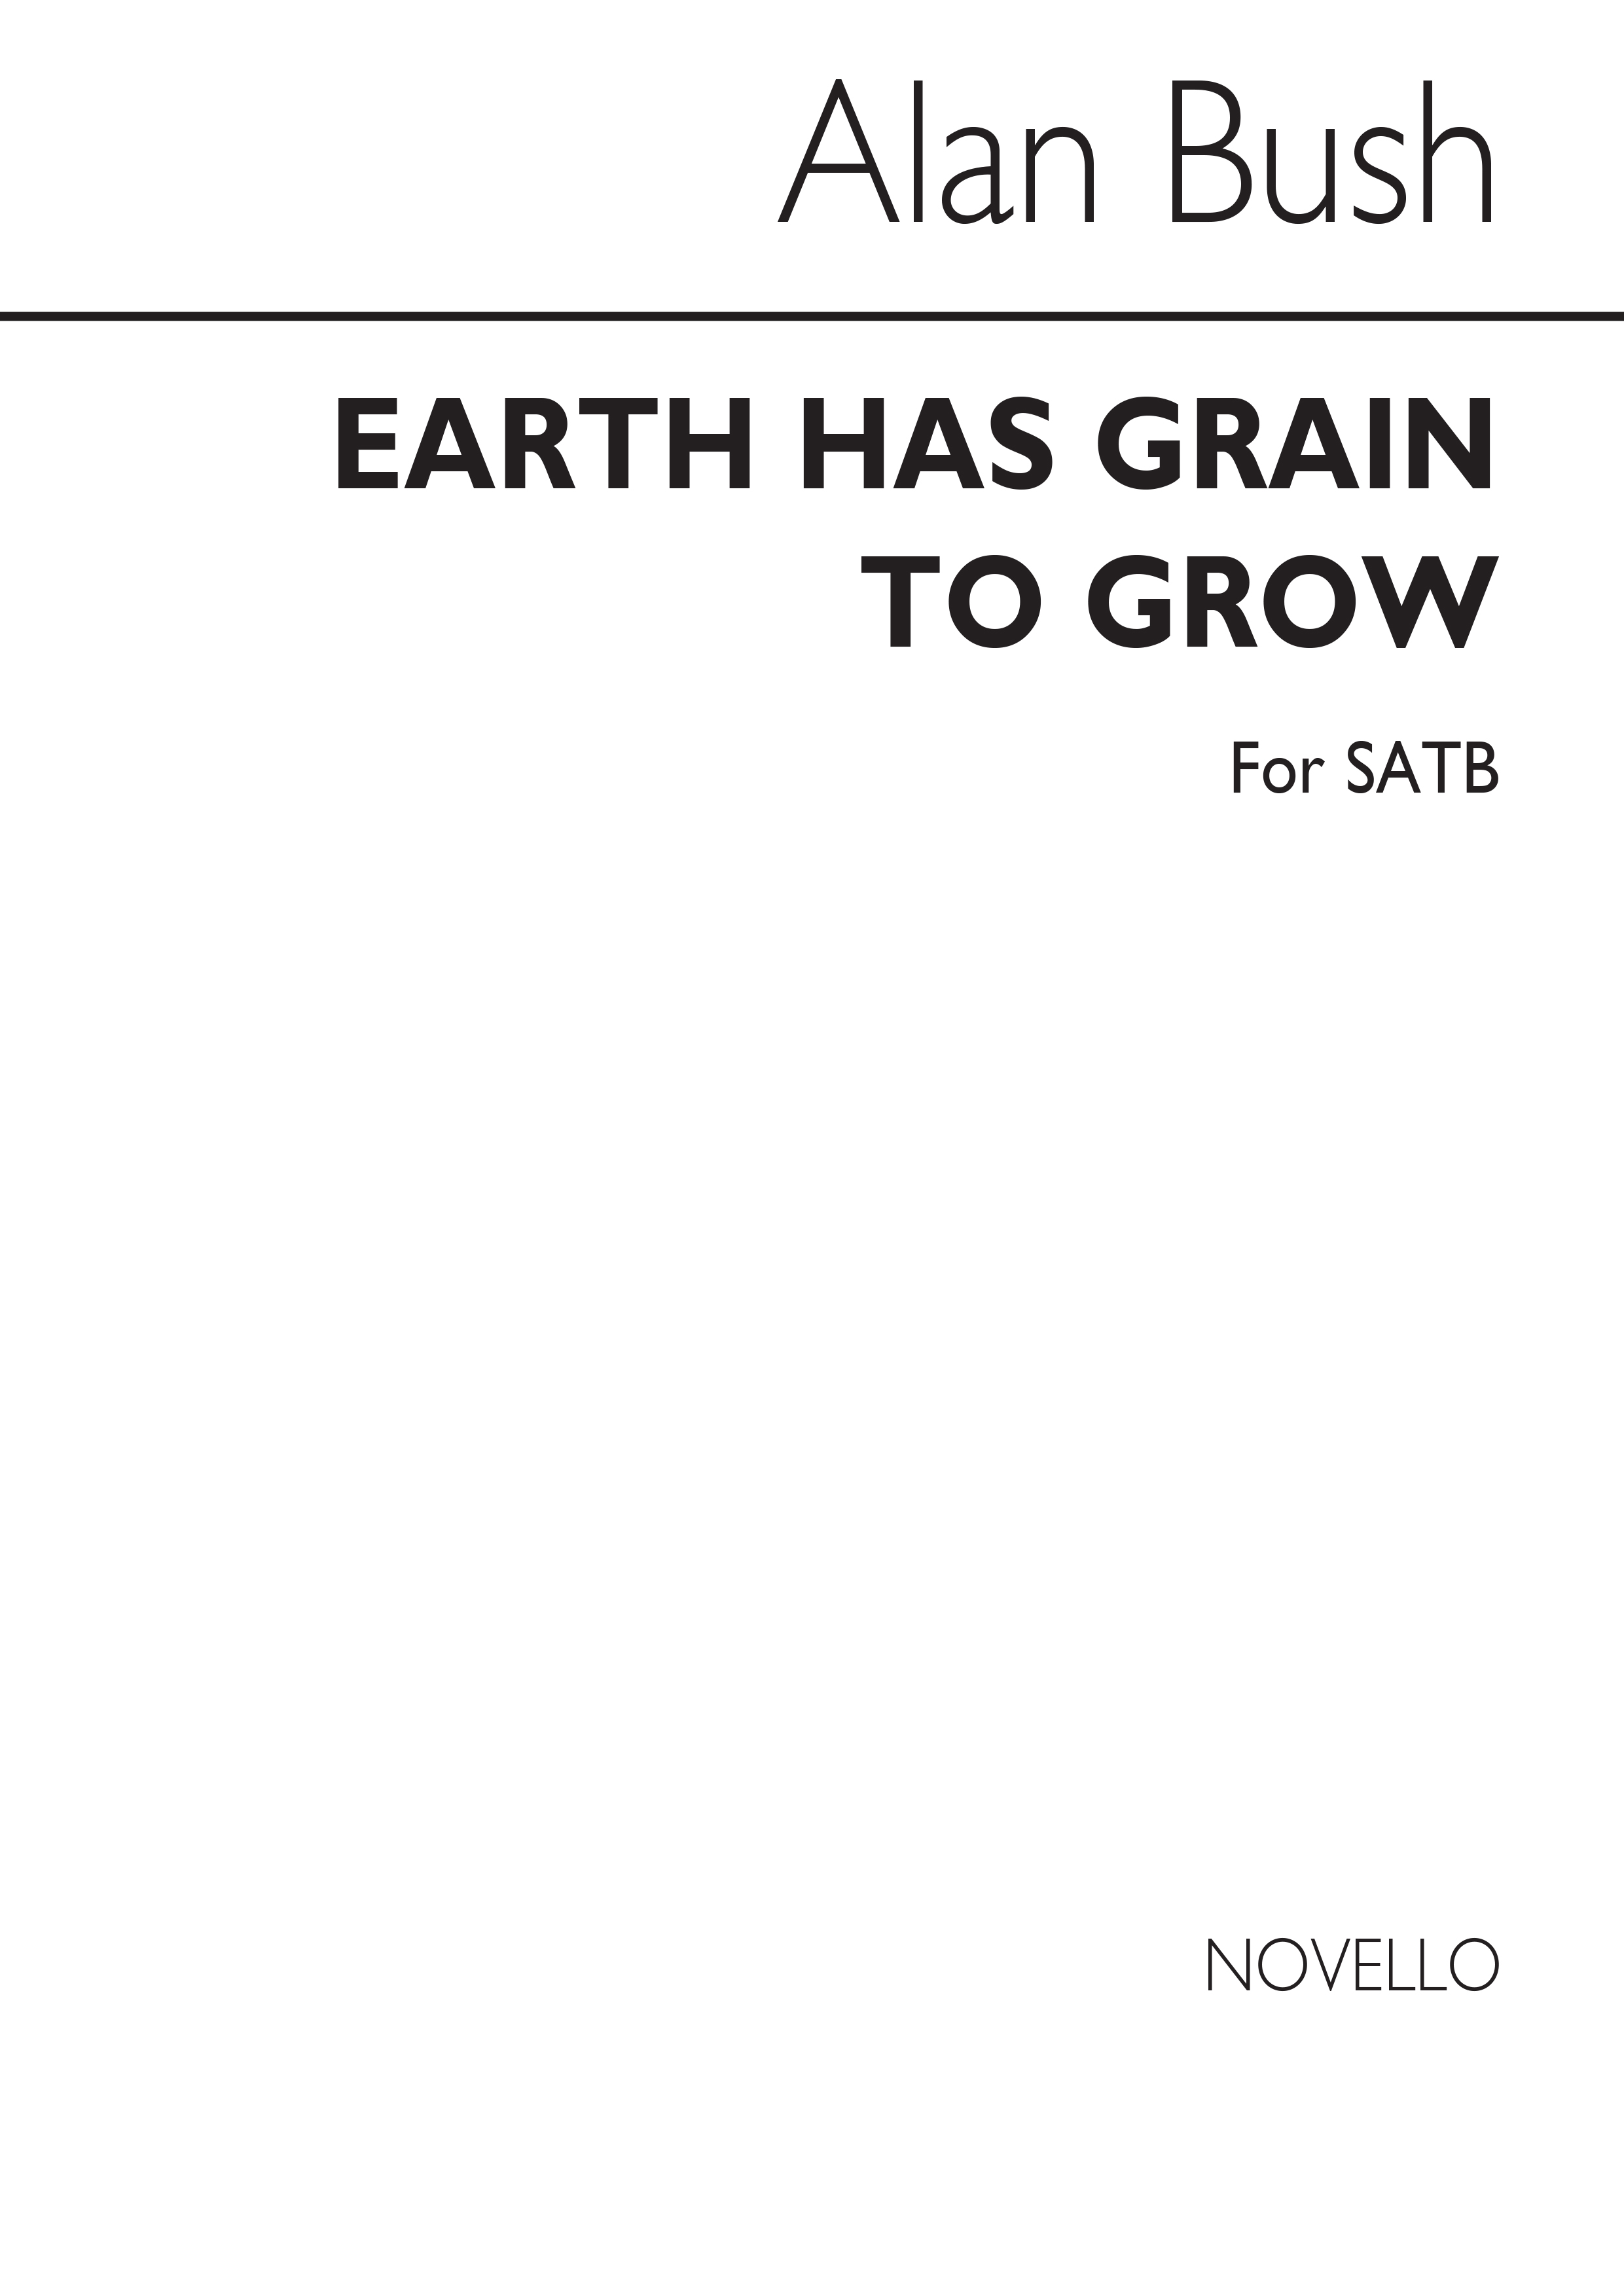 Alan Bush: Earth Has Grain To Grow for SATB Chorus